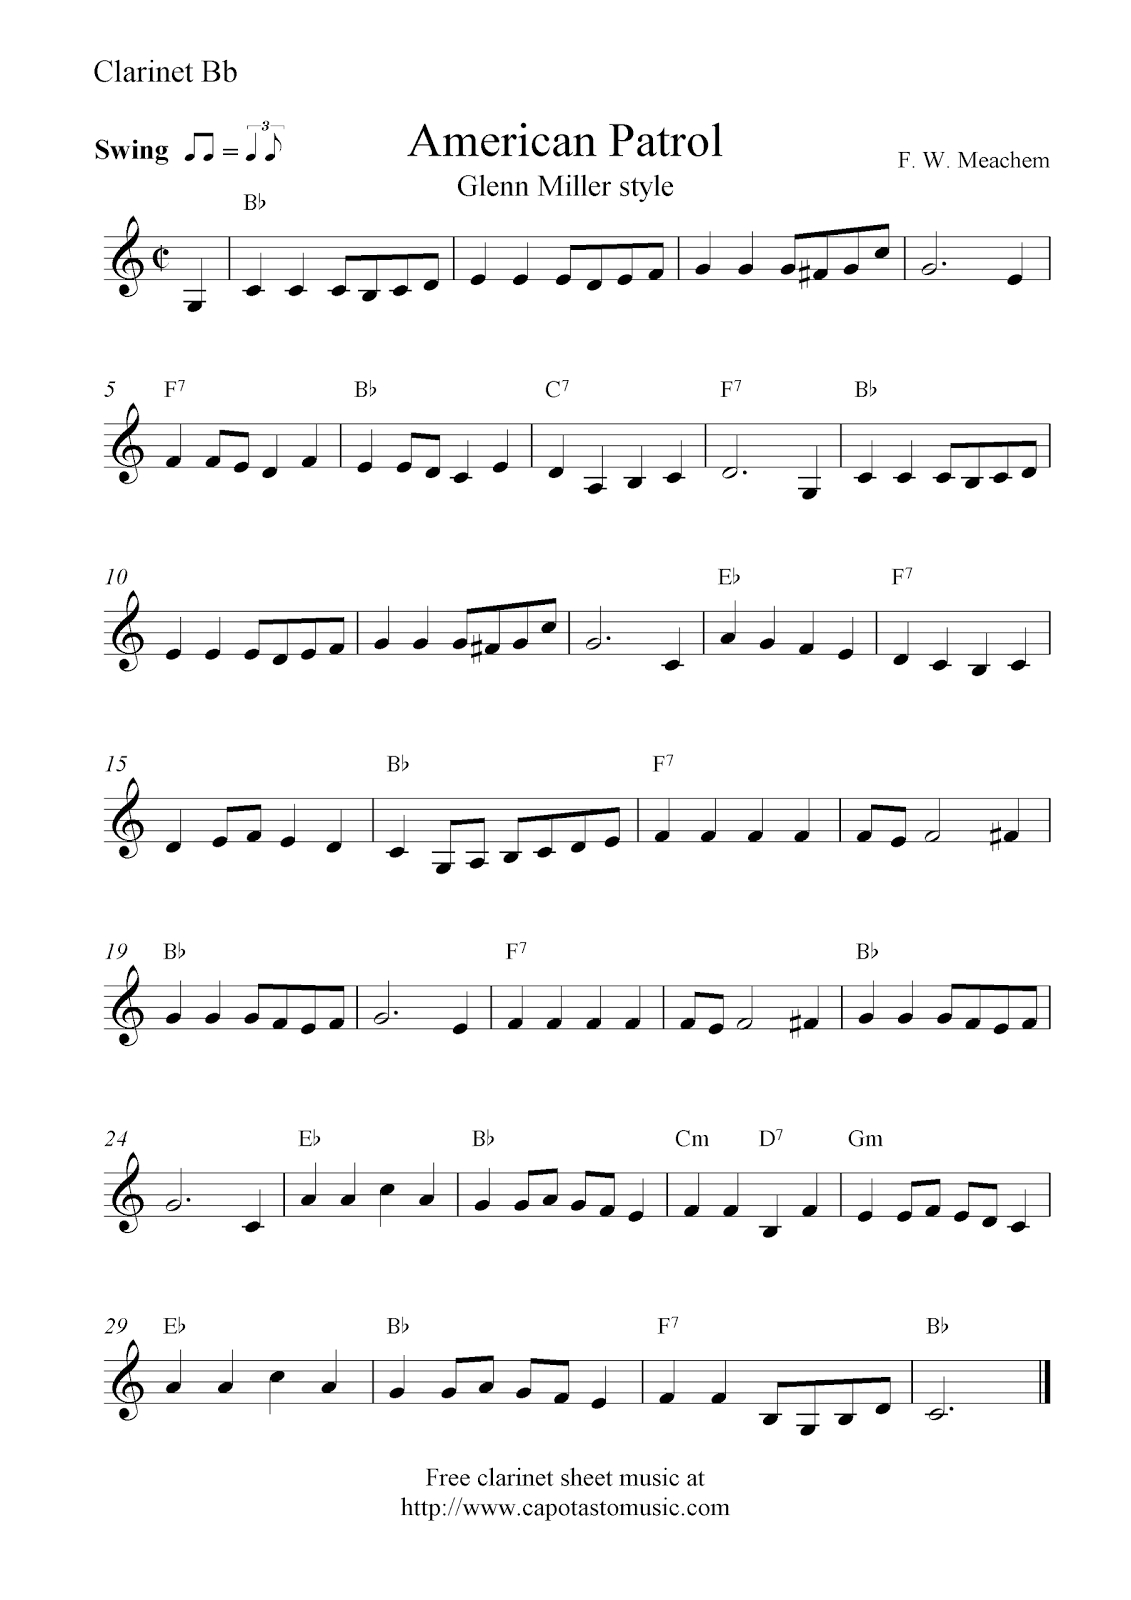 American Patrol, Free Clarinet Sheet Music Notes - Free Printable Clarinet Music